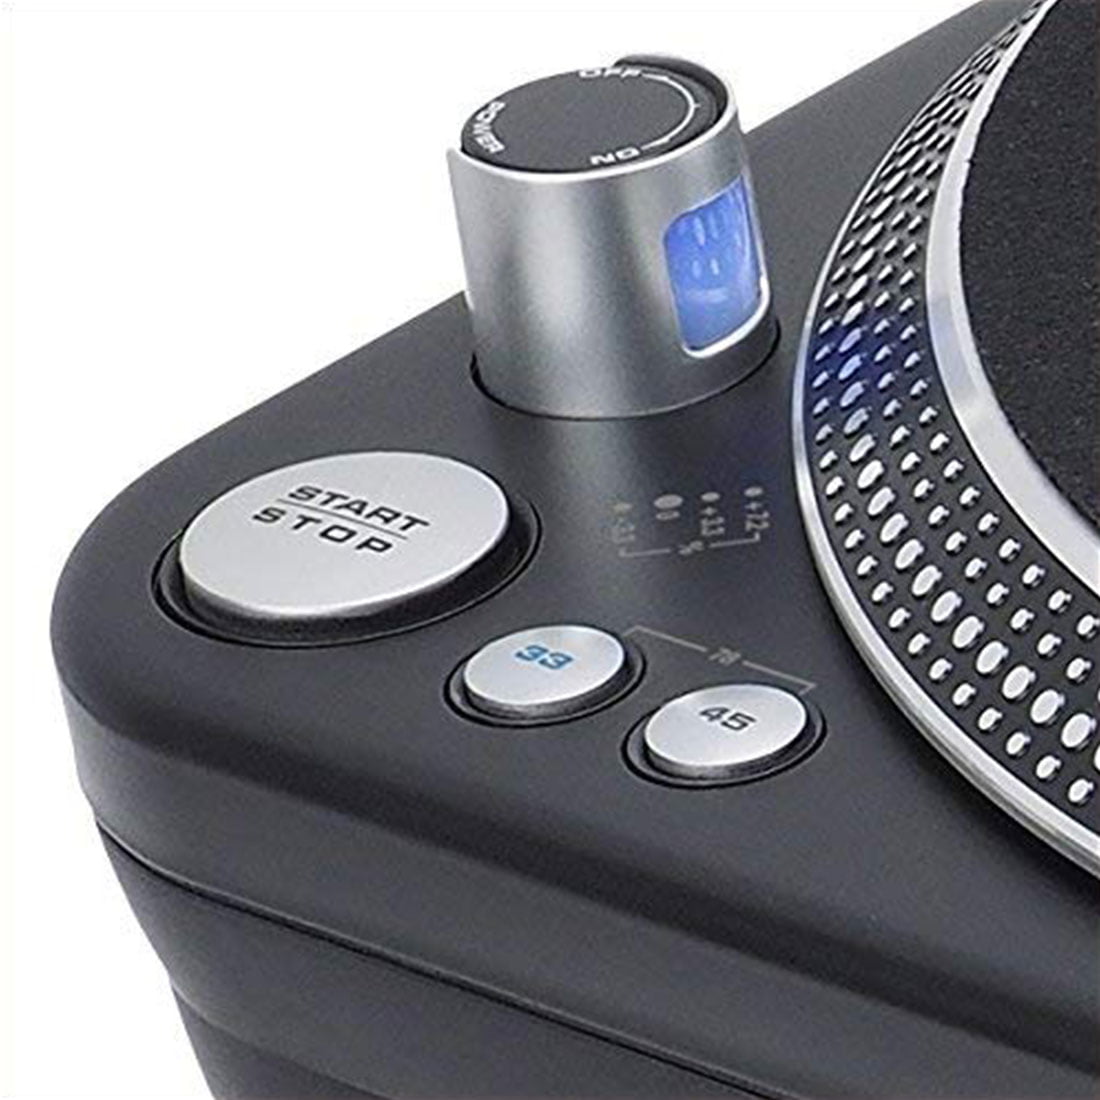 Audio-Technica AT LP120 USB Professional USB DJ Turntable - Ex Demo